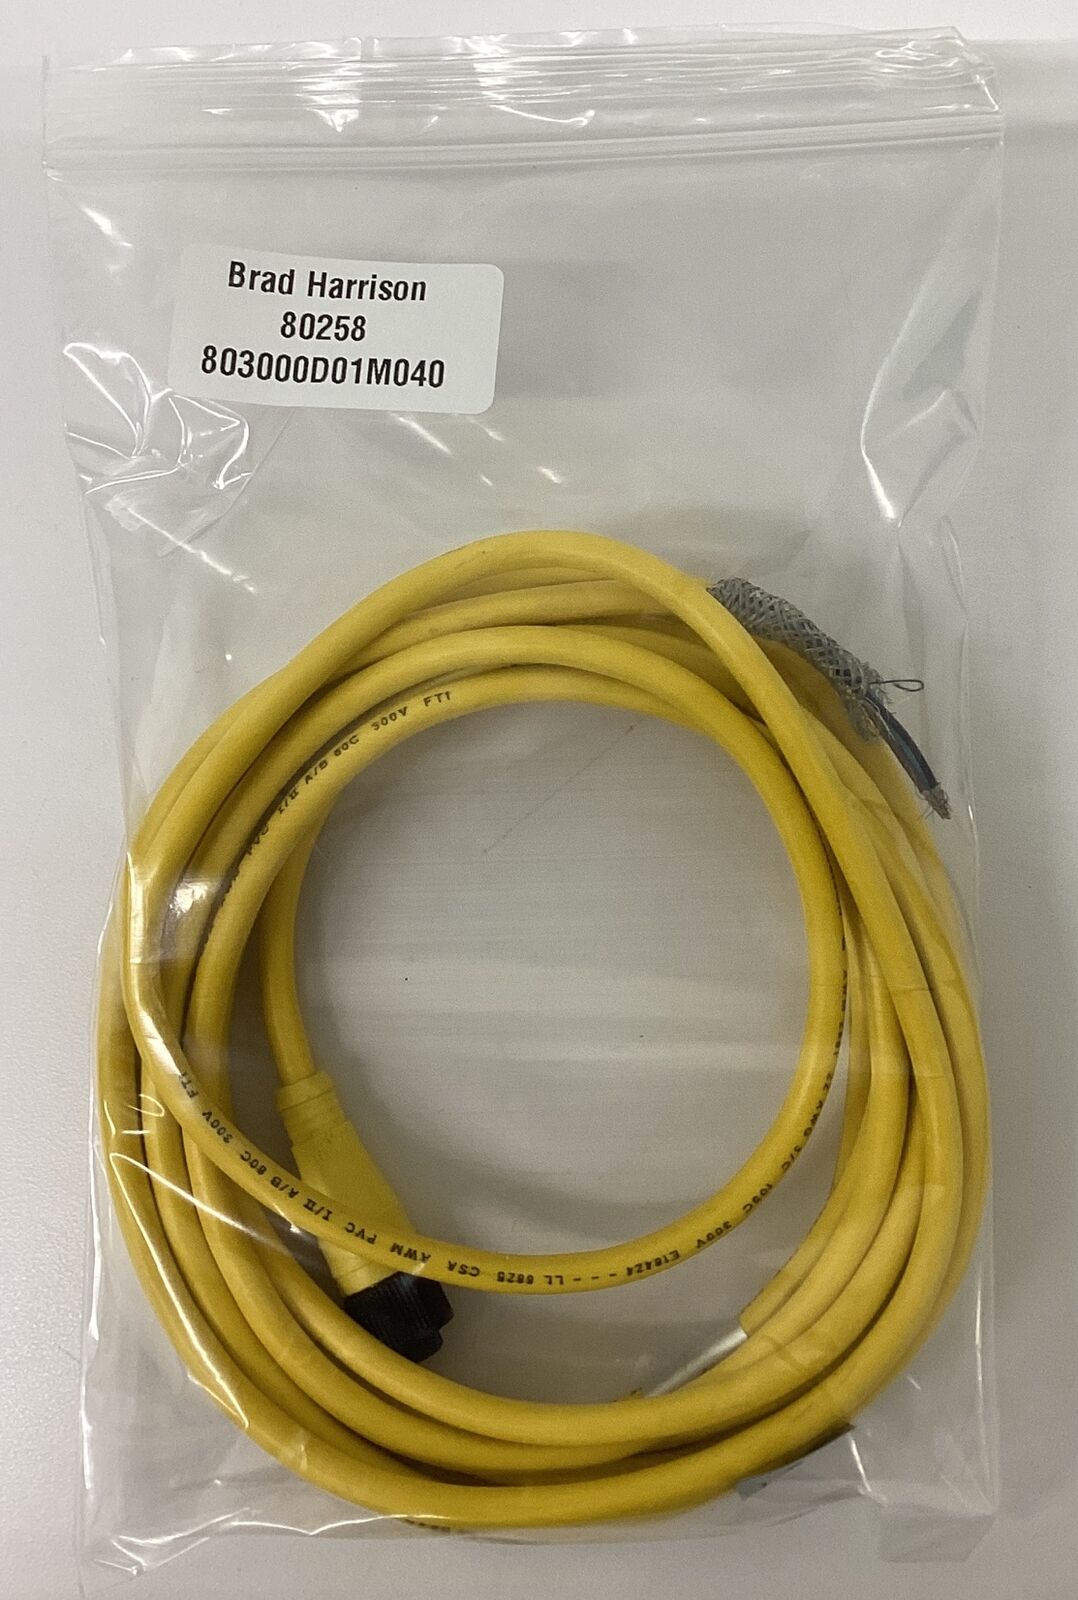 Brad Harrison 80258 803000D01M040 3P Female Micro Change Cable 4 meters (GR202) - 0